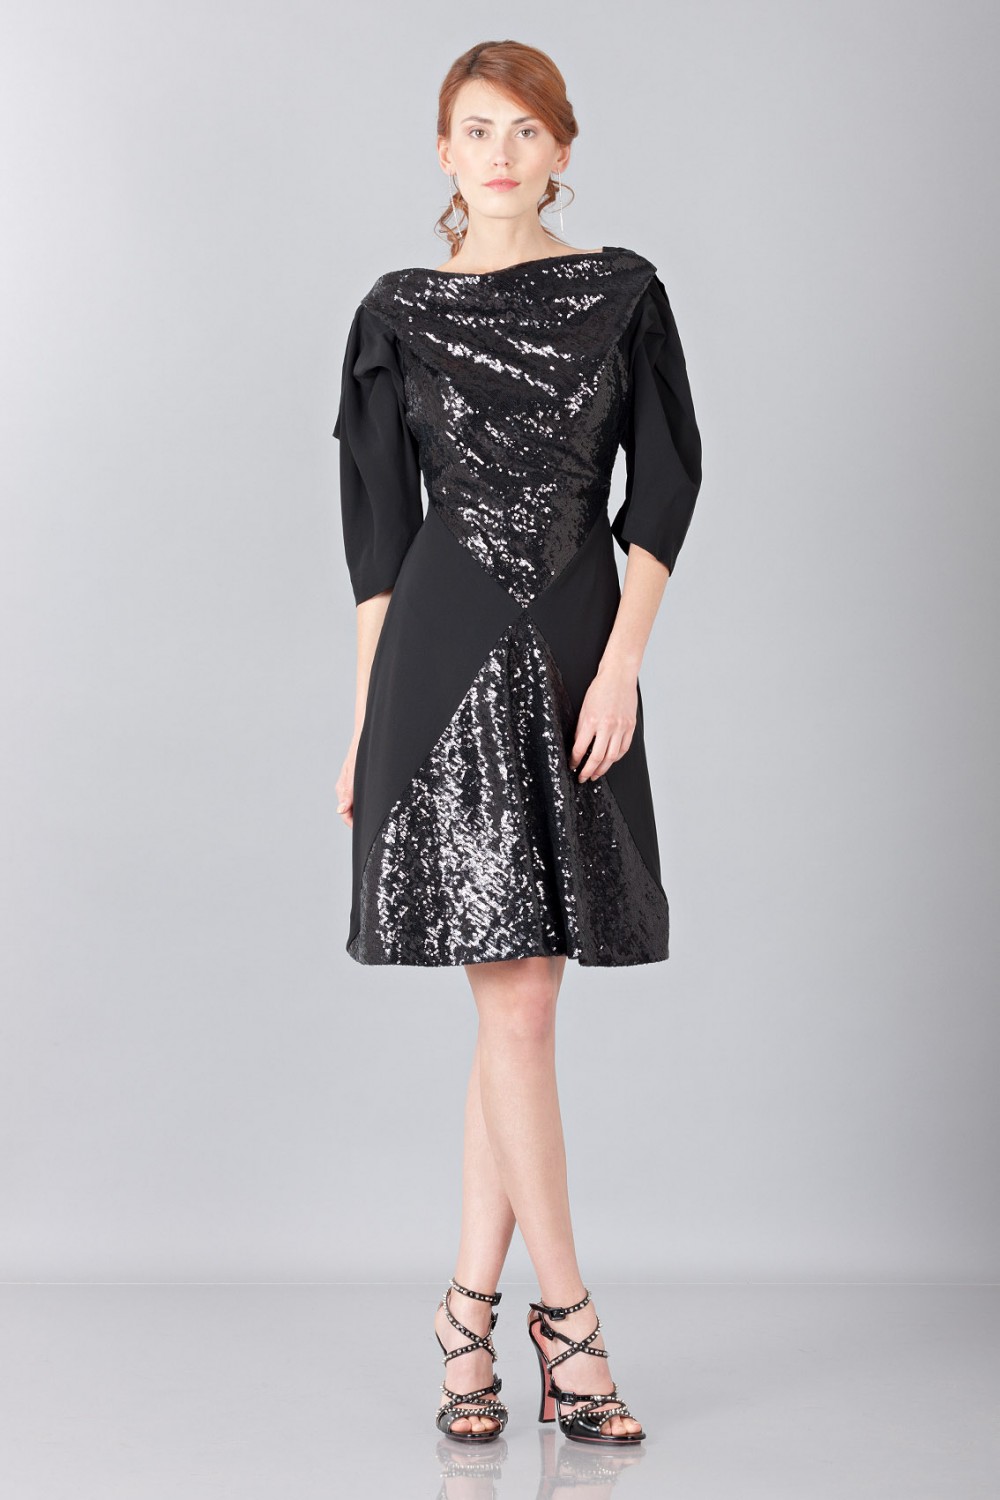 Vendita Abbigliamento Usato FIrmato - Paillettes dress - Vivienne Westwood - Drexcode -5